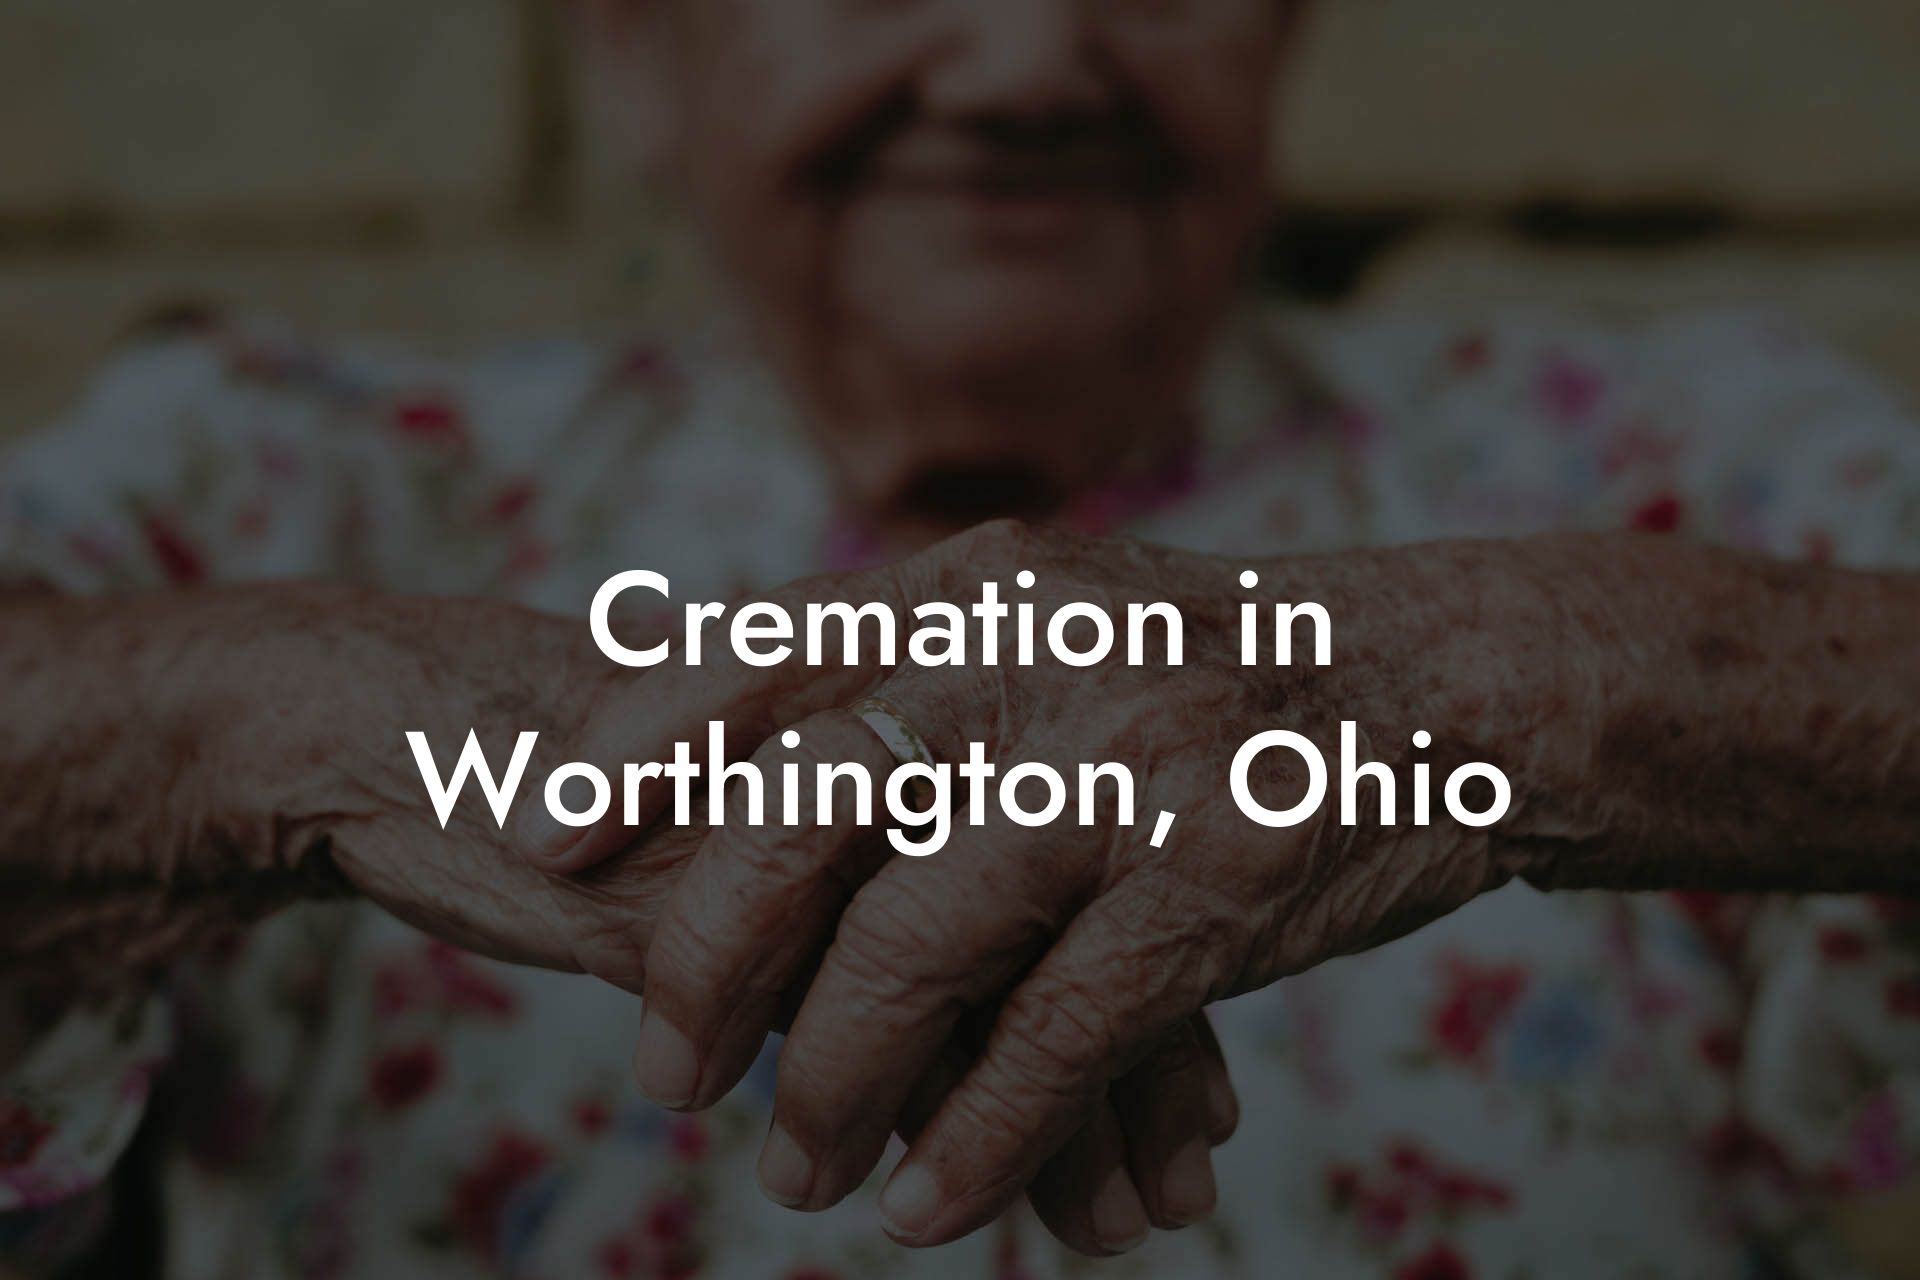 Cremation in Worthington, Ohio